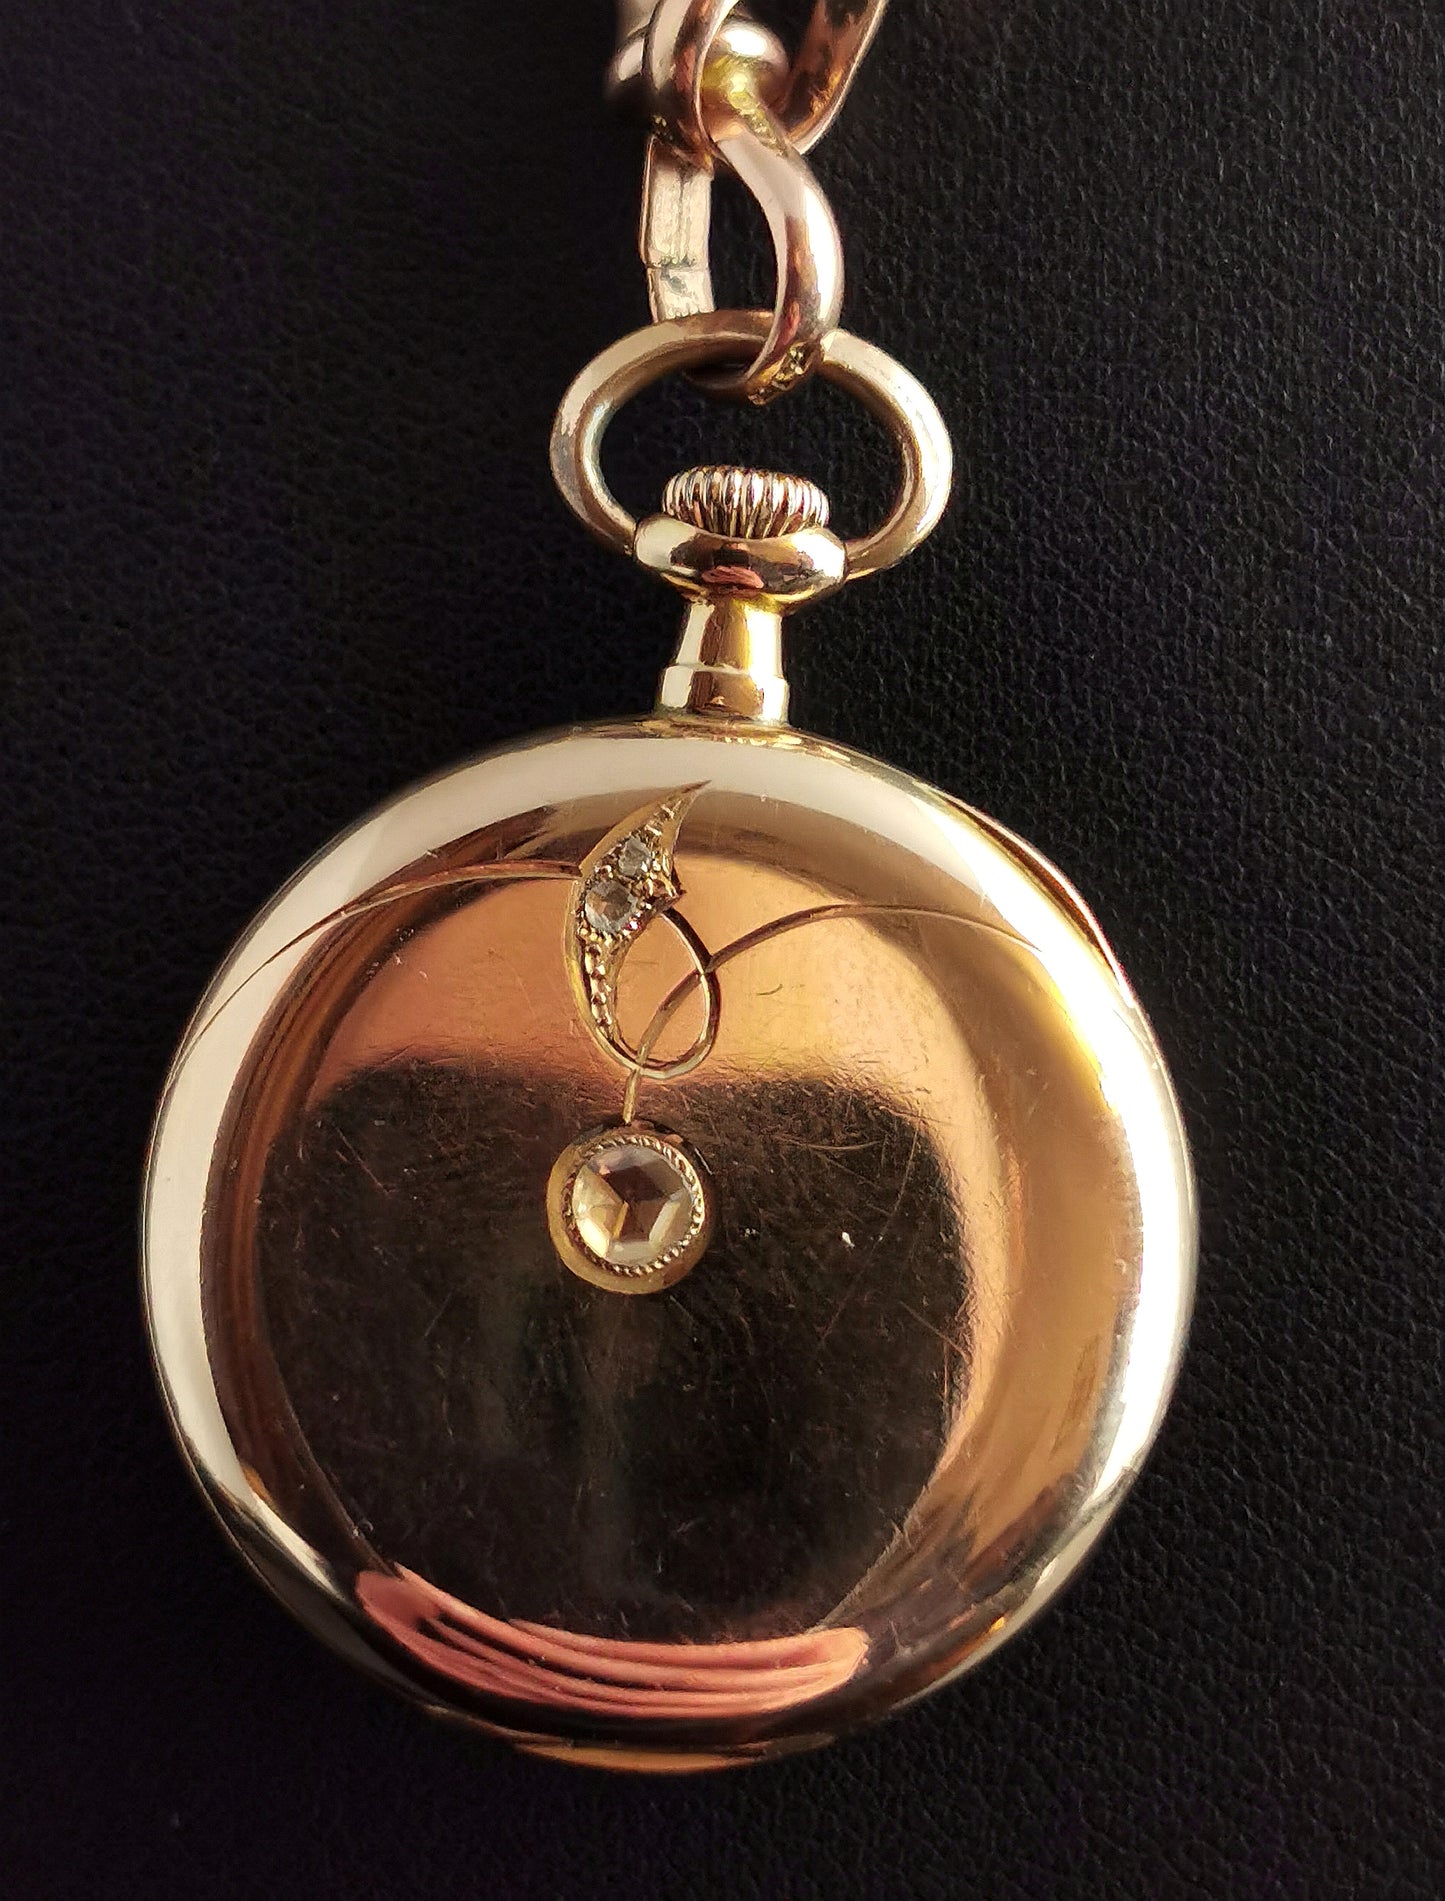 Antique 18ct gold pocket watch, Rose cut diamond, Art Nouveau, fob watch